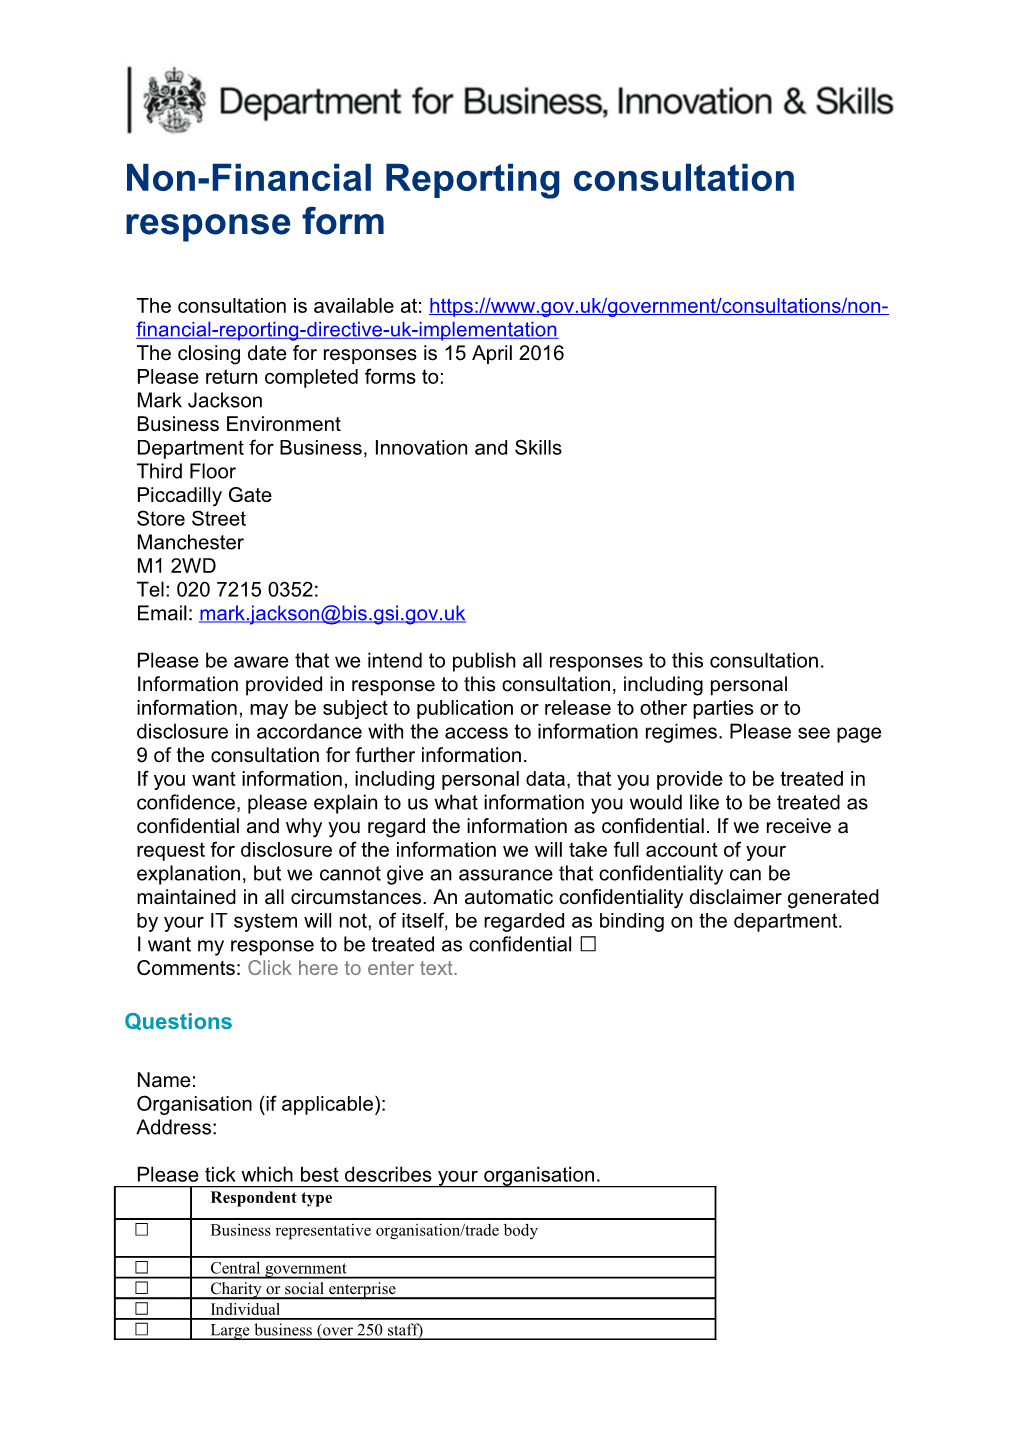 Non-Financial Reporting Consultation Response Form